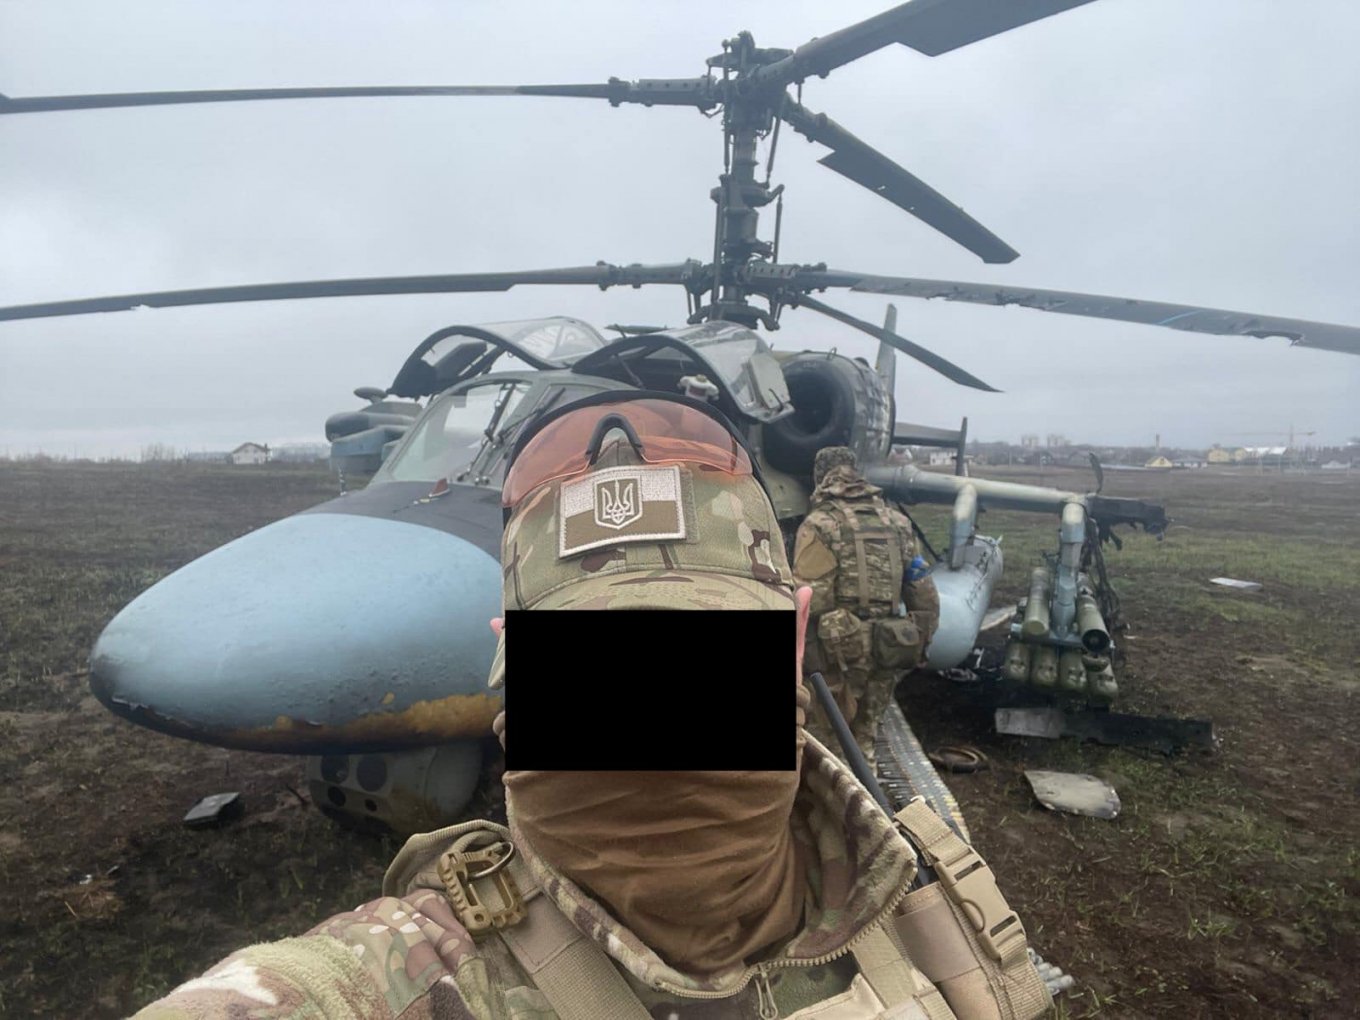 Ukrainian warriors seized Ka-52 helicopter in Kyiv region, on Saturday, April 2, 2022, Defense Express